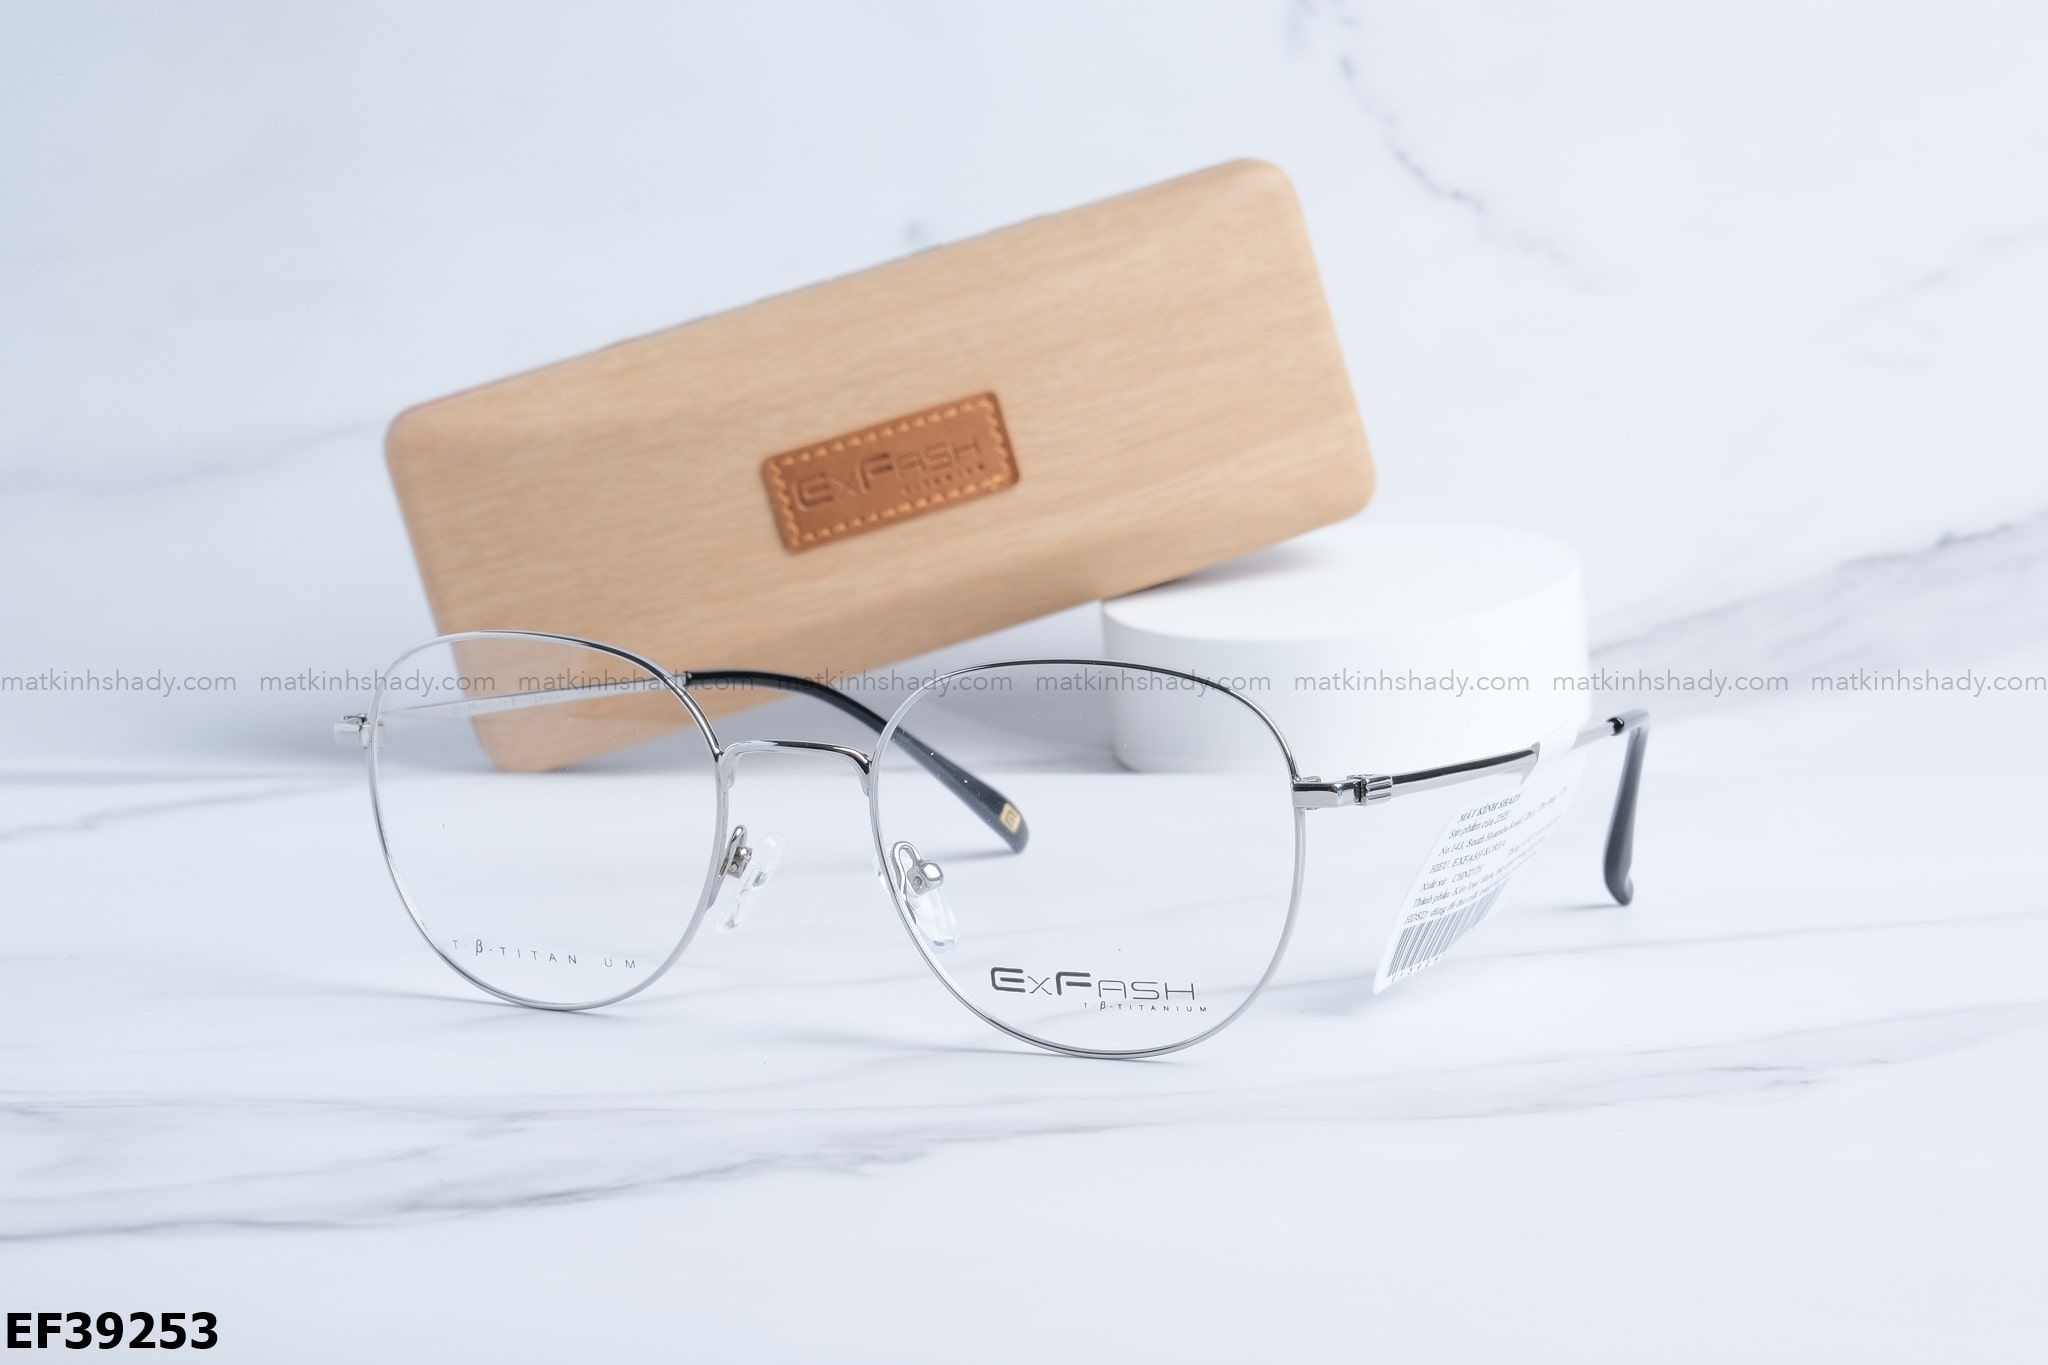  Exfash Eyewear - Glasses - EF39253 